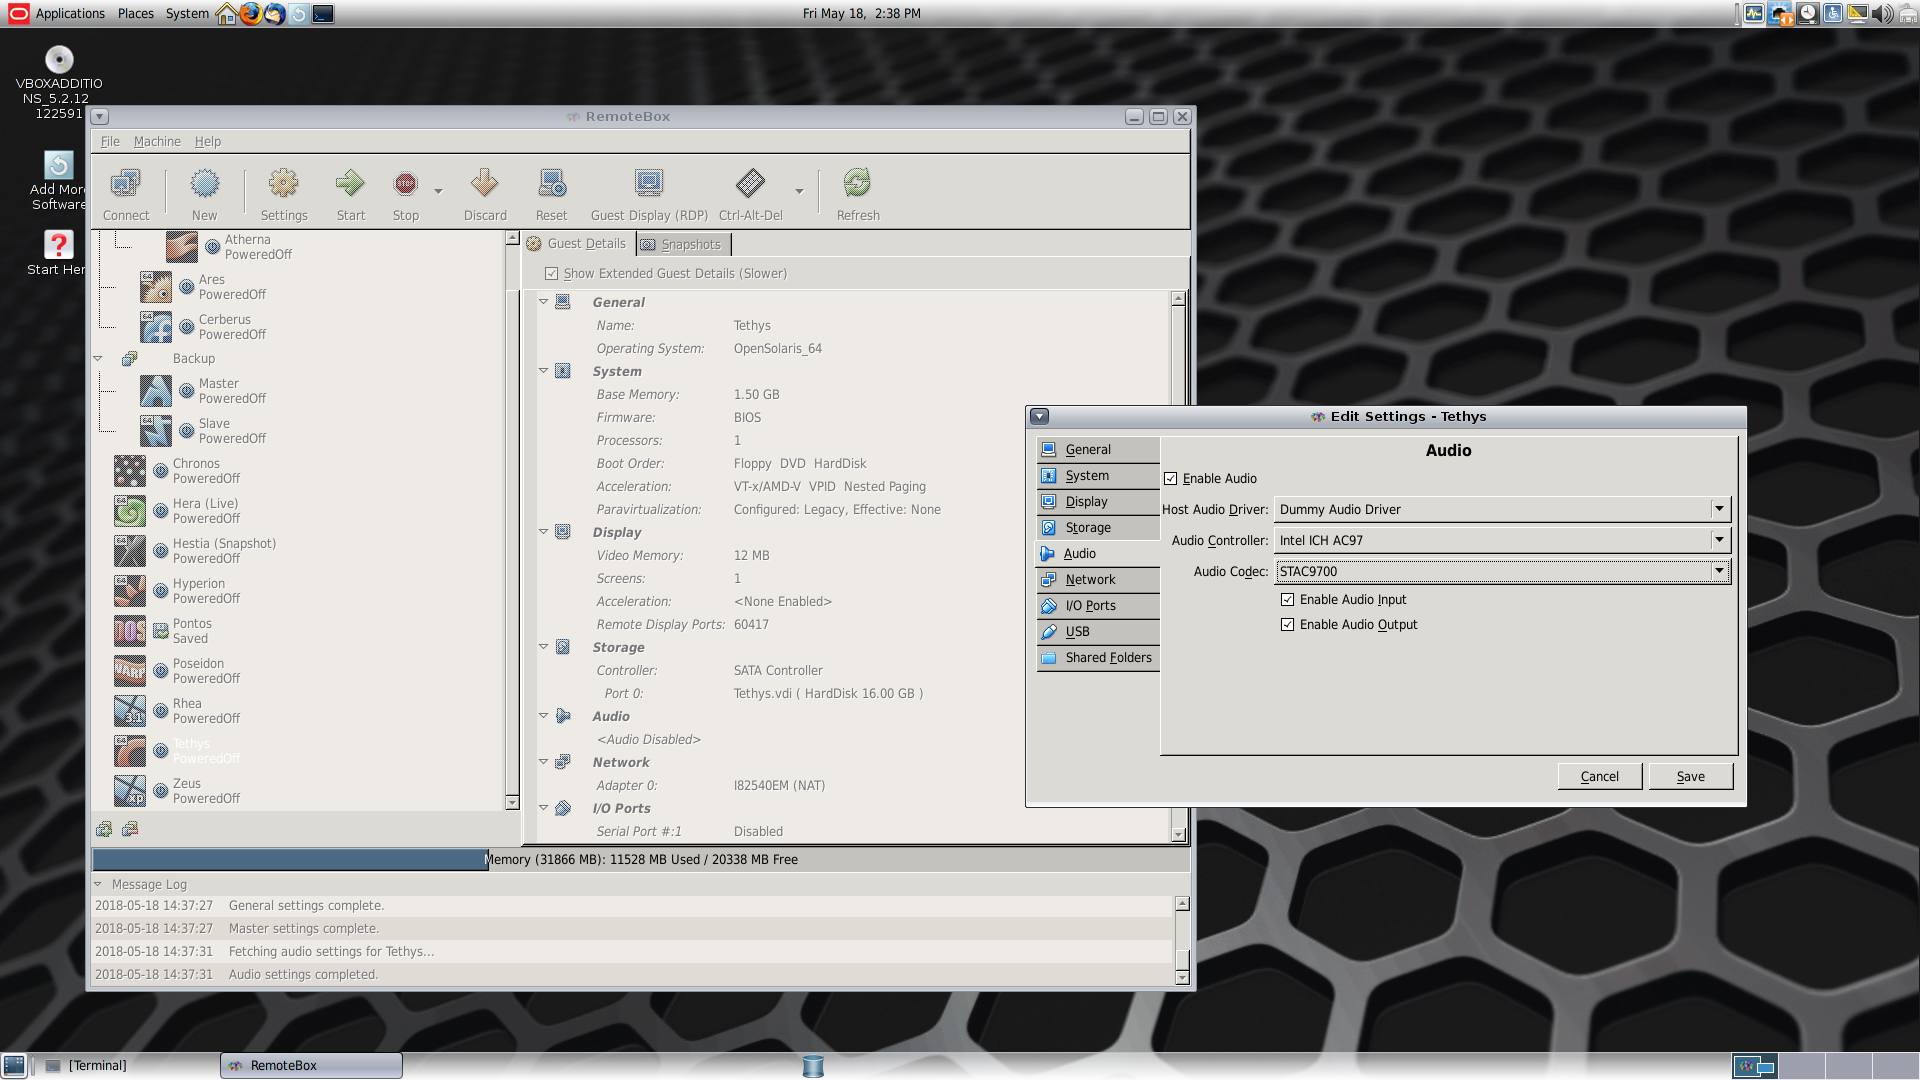 RemoteBox 2.5 on Solaris 11.3